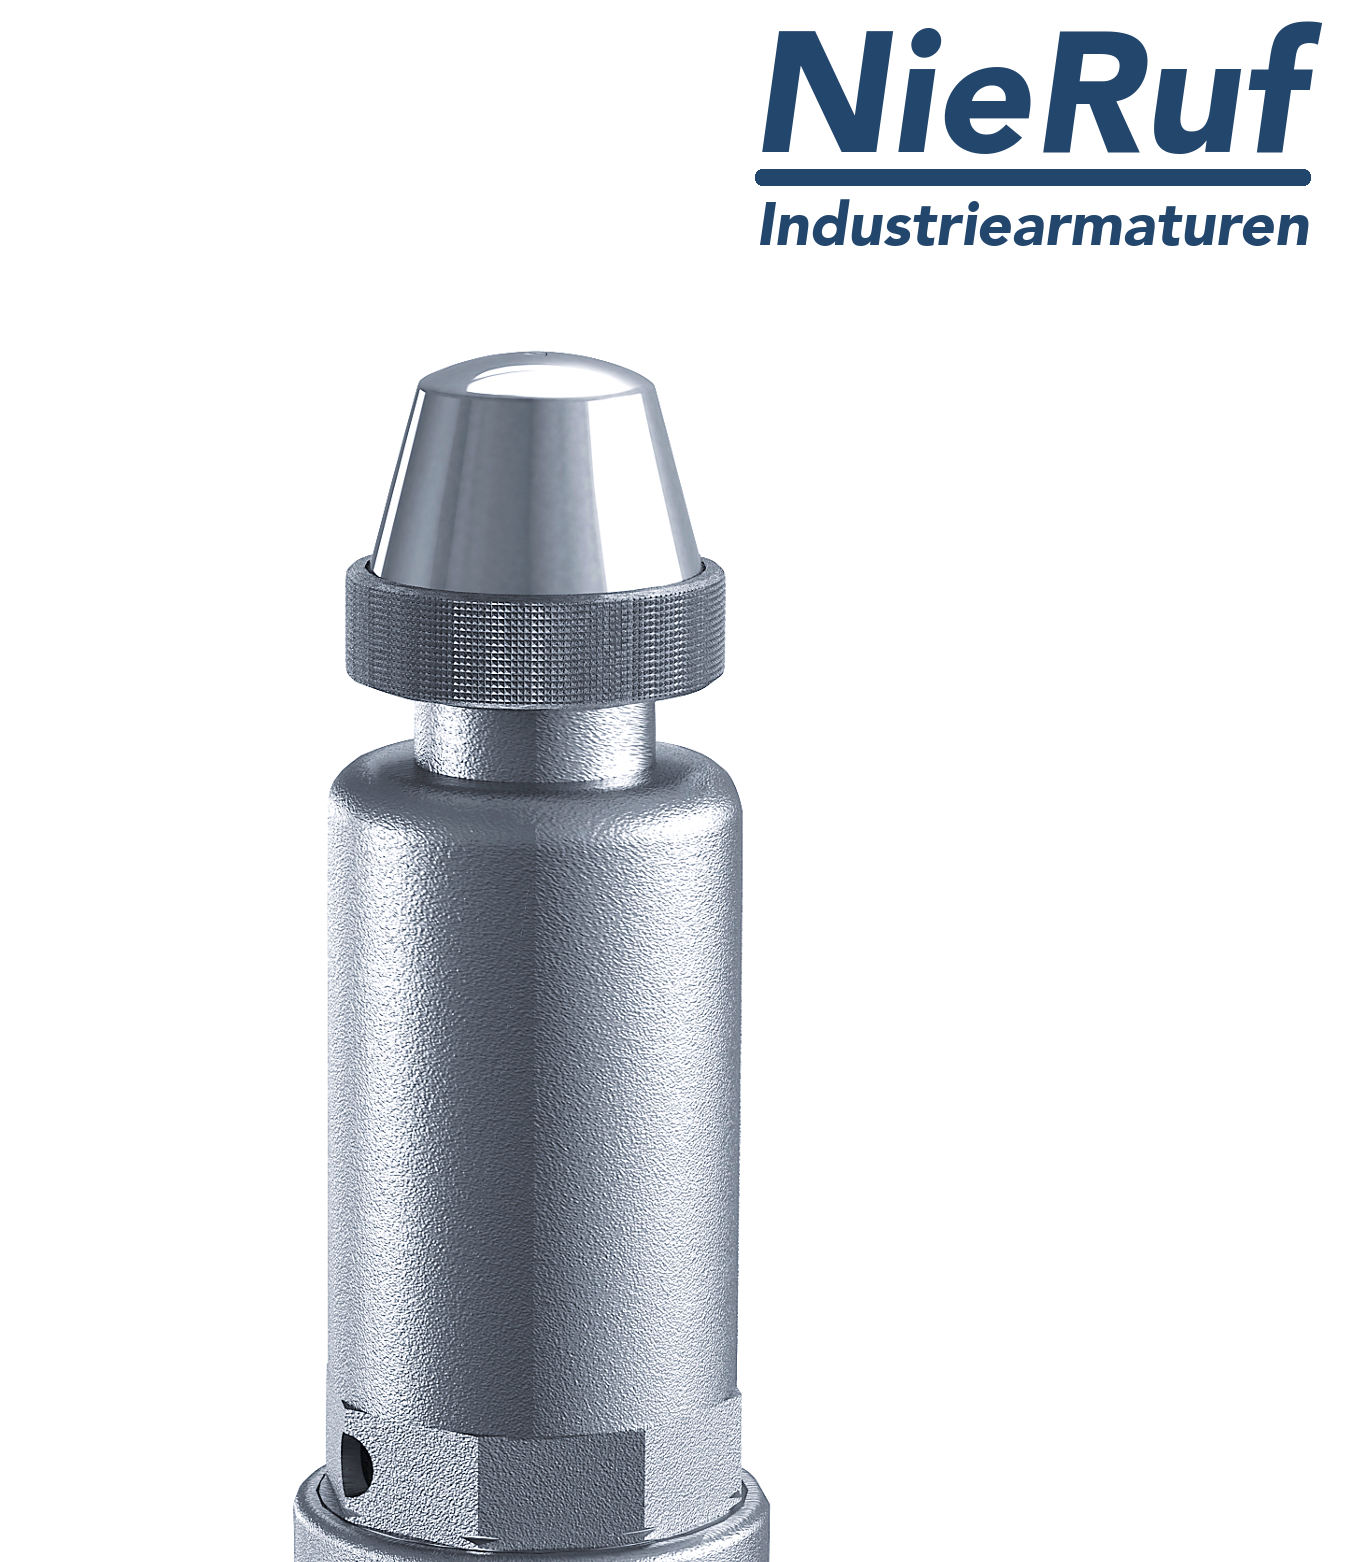 safety valve 2" x 2" fm SV05 neutral liquid media, stainless steel PTFE